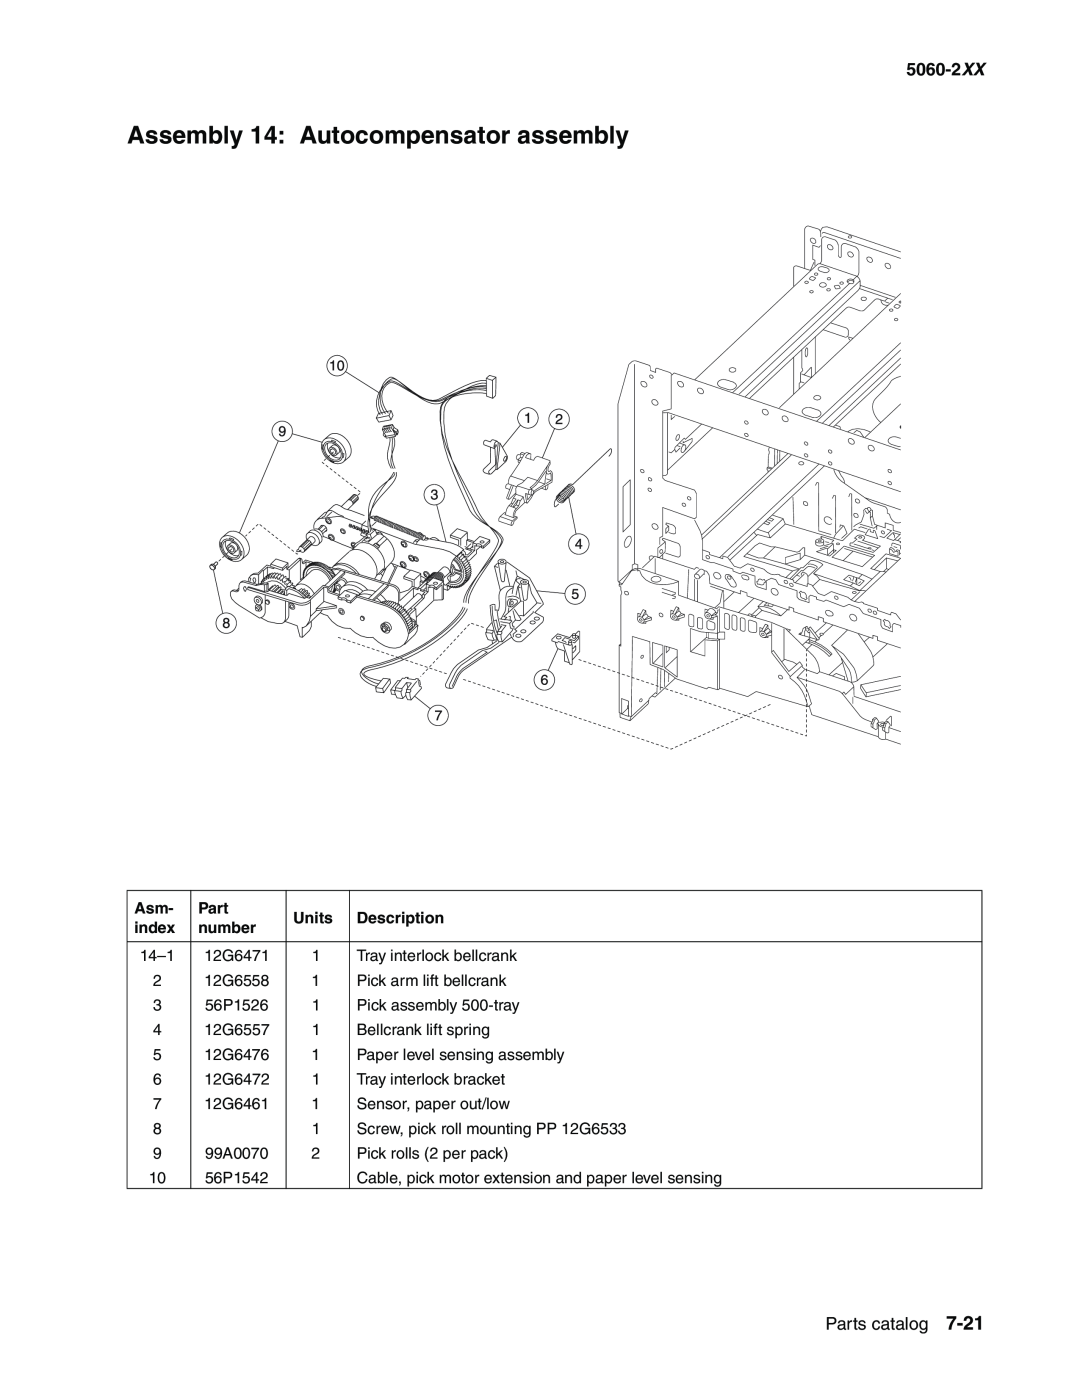 Lexmark 5060-2XX manual Assembly 14 Autocompensator assembly, Parts catalog, Units, Description, index, number 